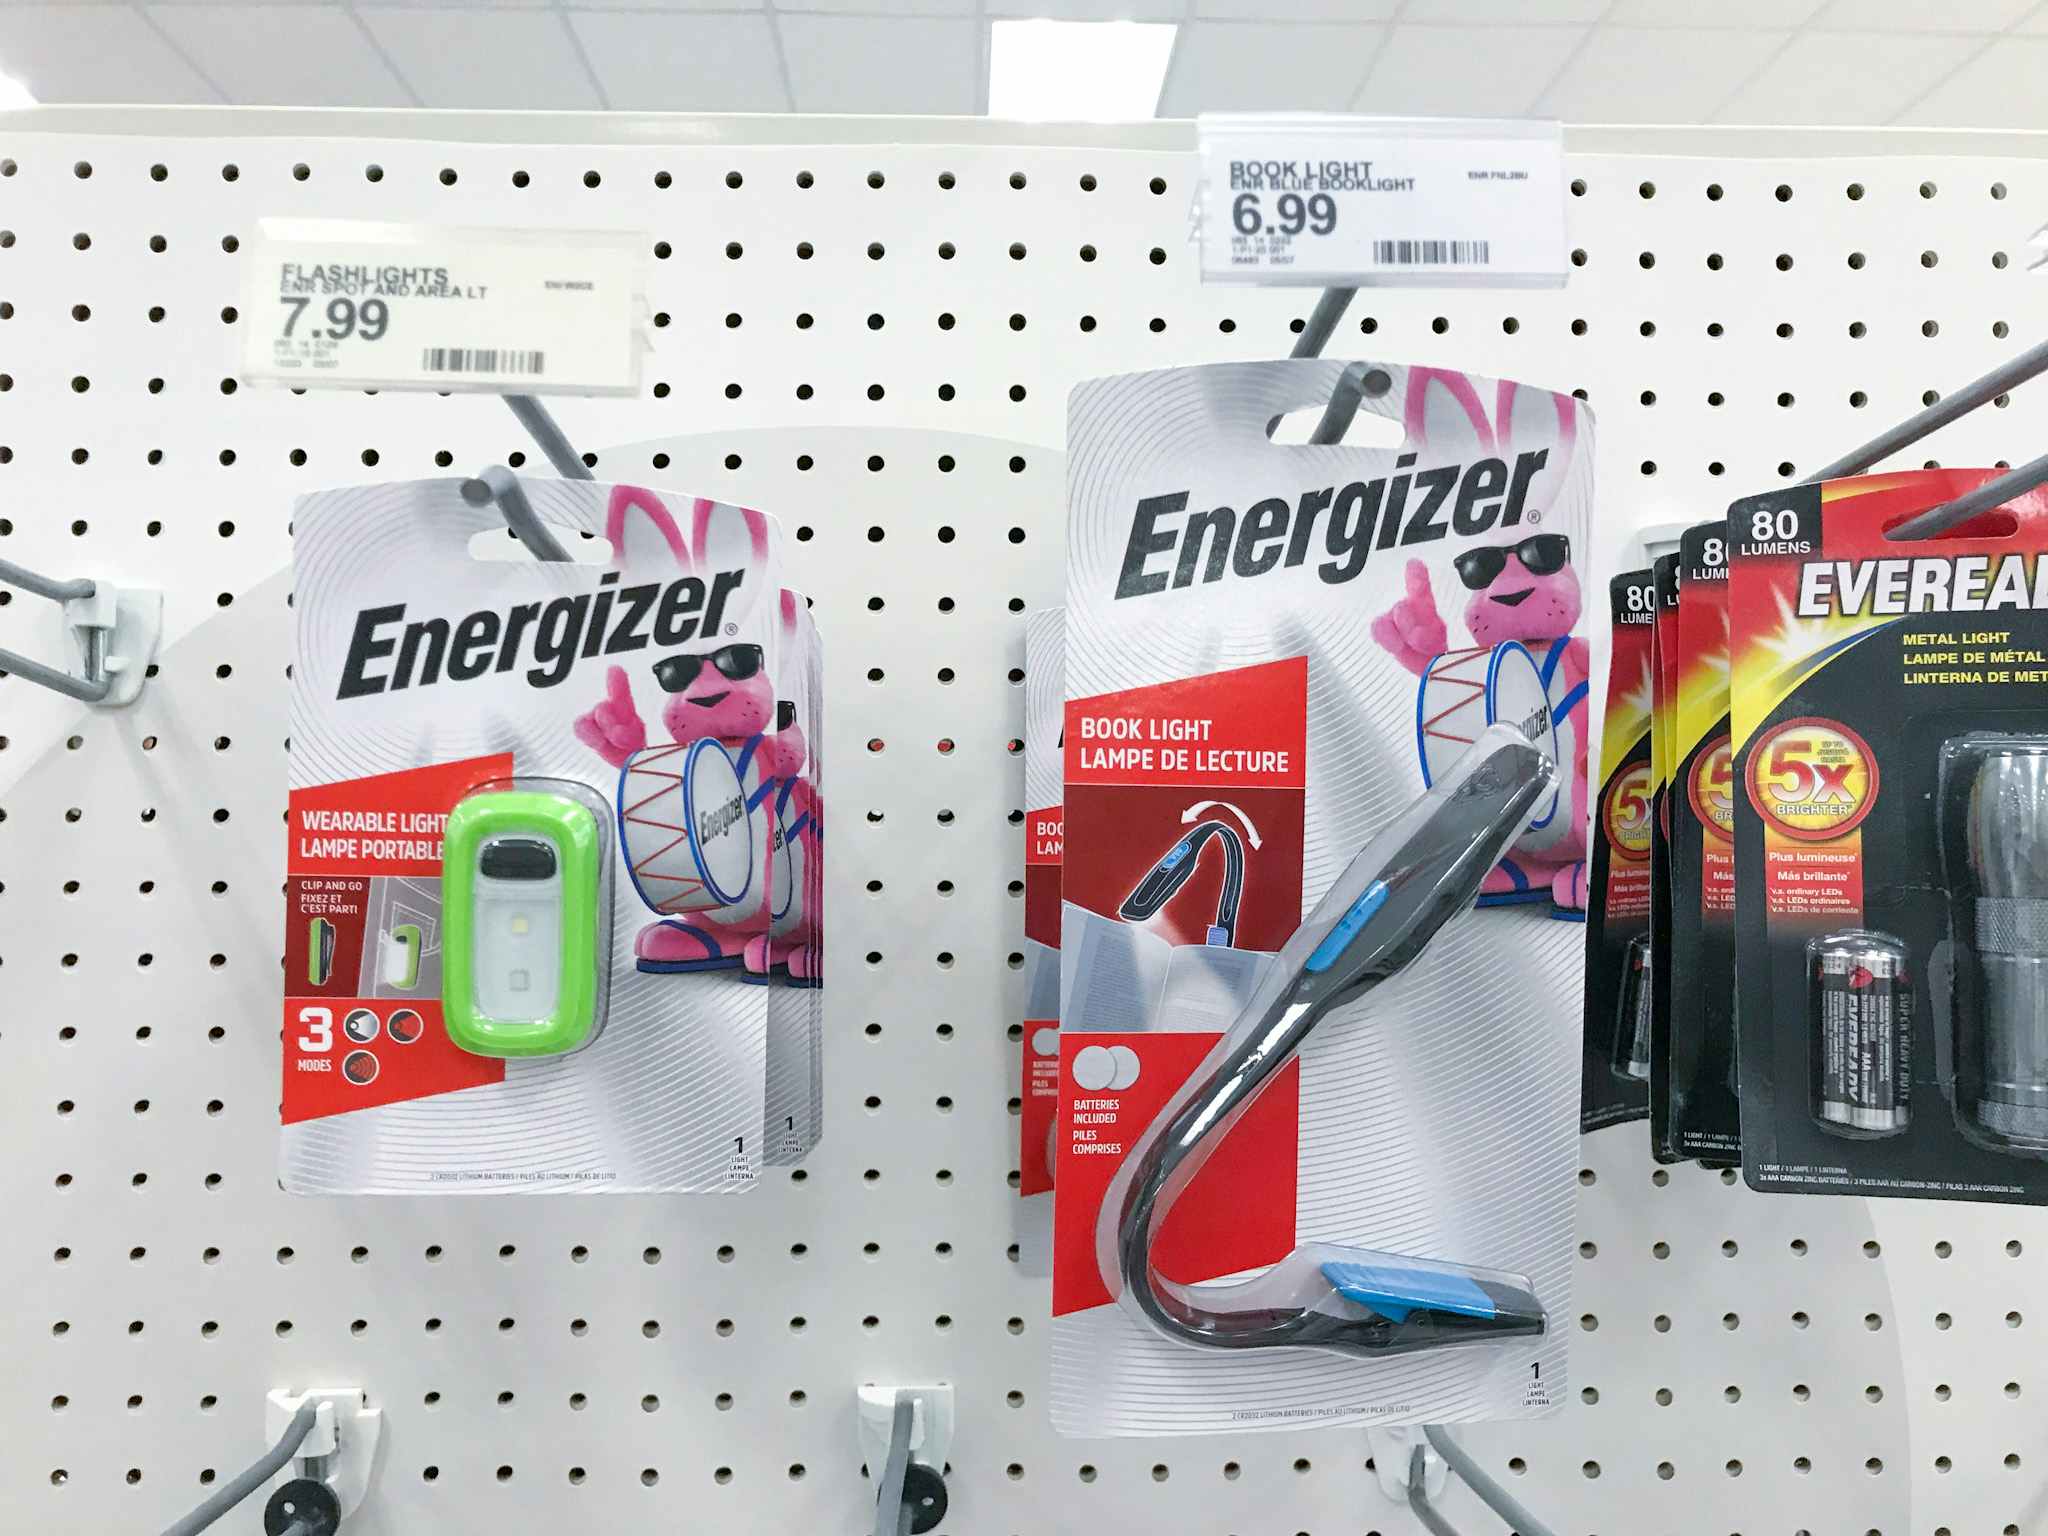 energizer book light on a target shelf